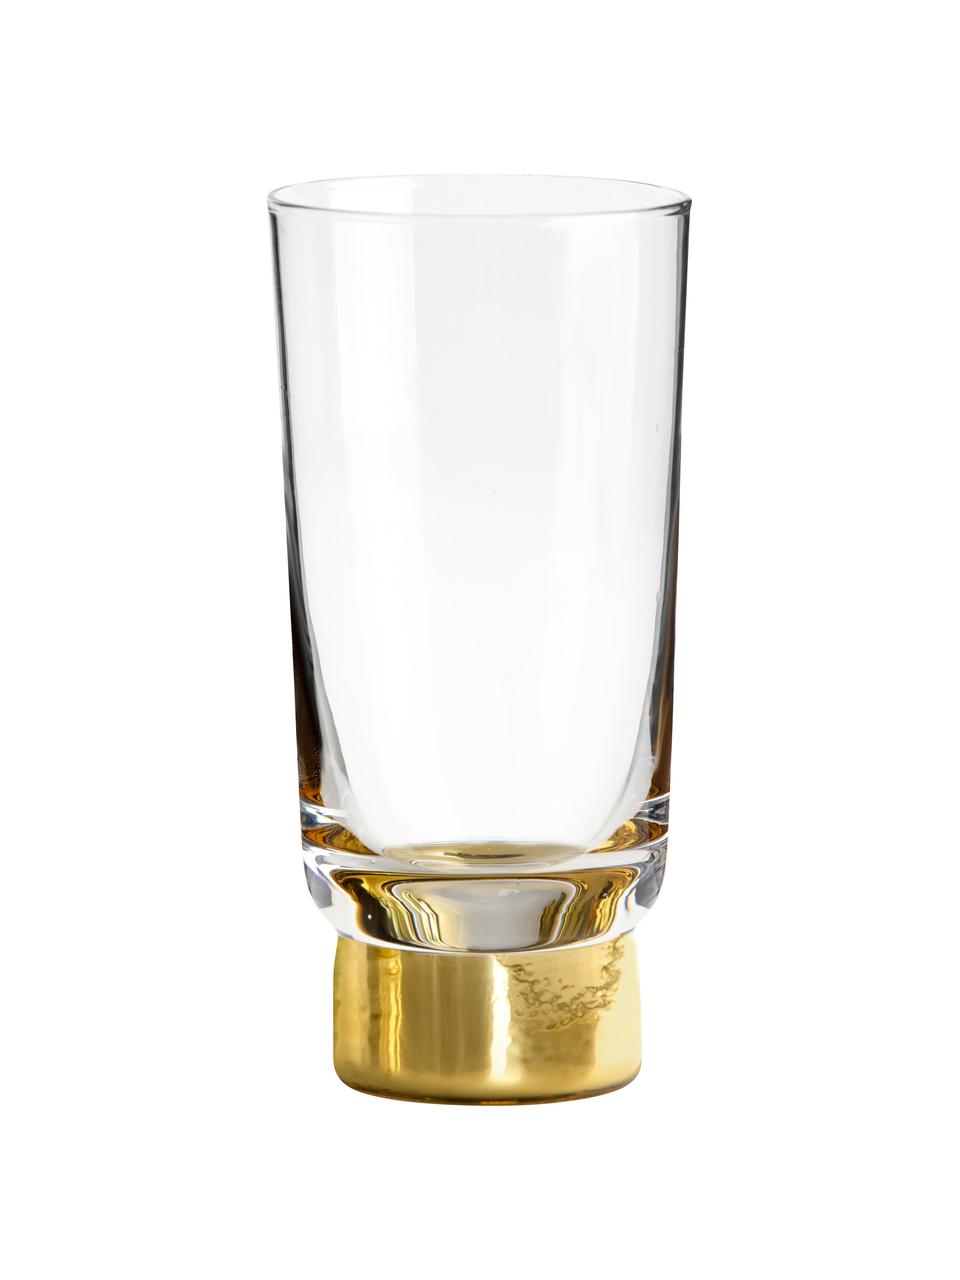 Barglazen Club met goudkleurige voetstuk, 2 stuks, Mondgeblazen glas, Transparant, goudkleurig, Ø 7 x H 16 cm